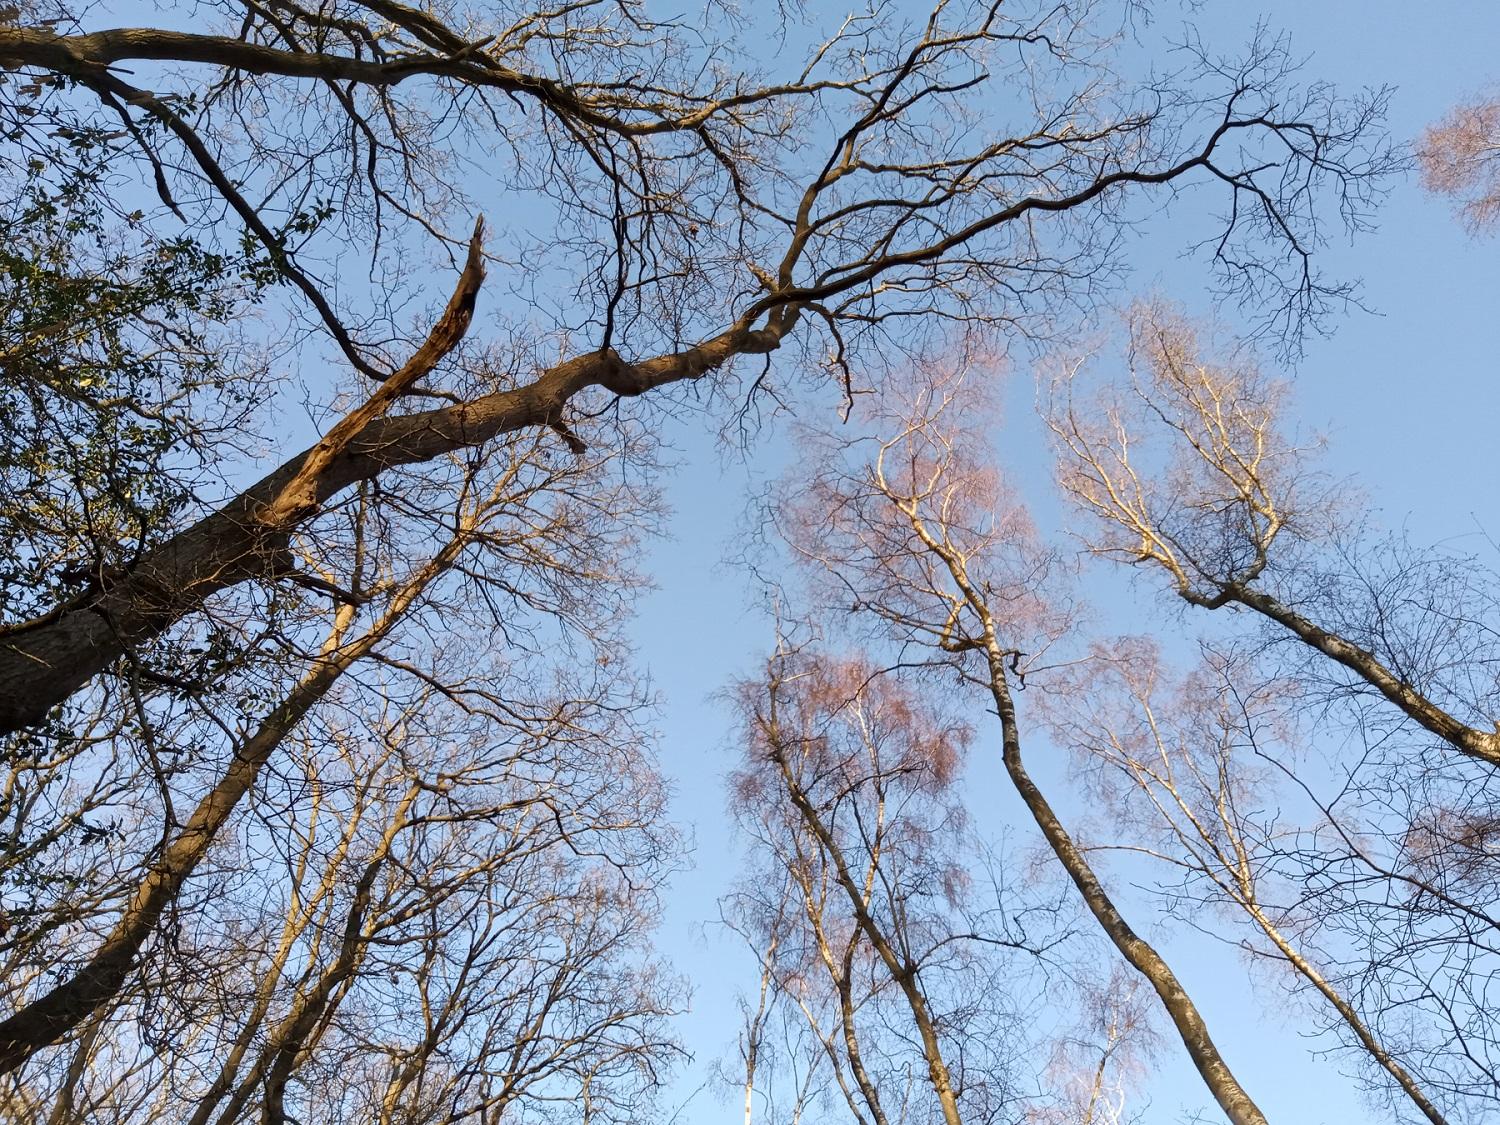 The sunlight in winter tree limbs